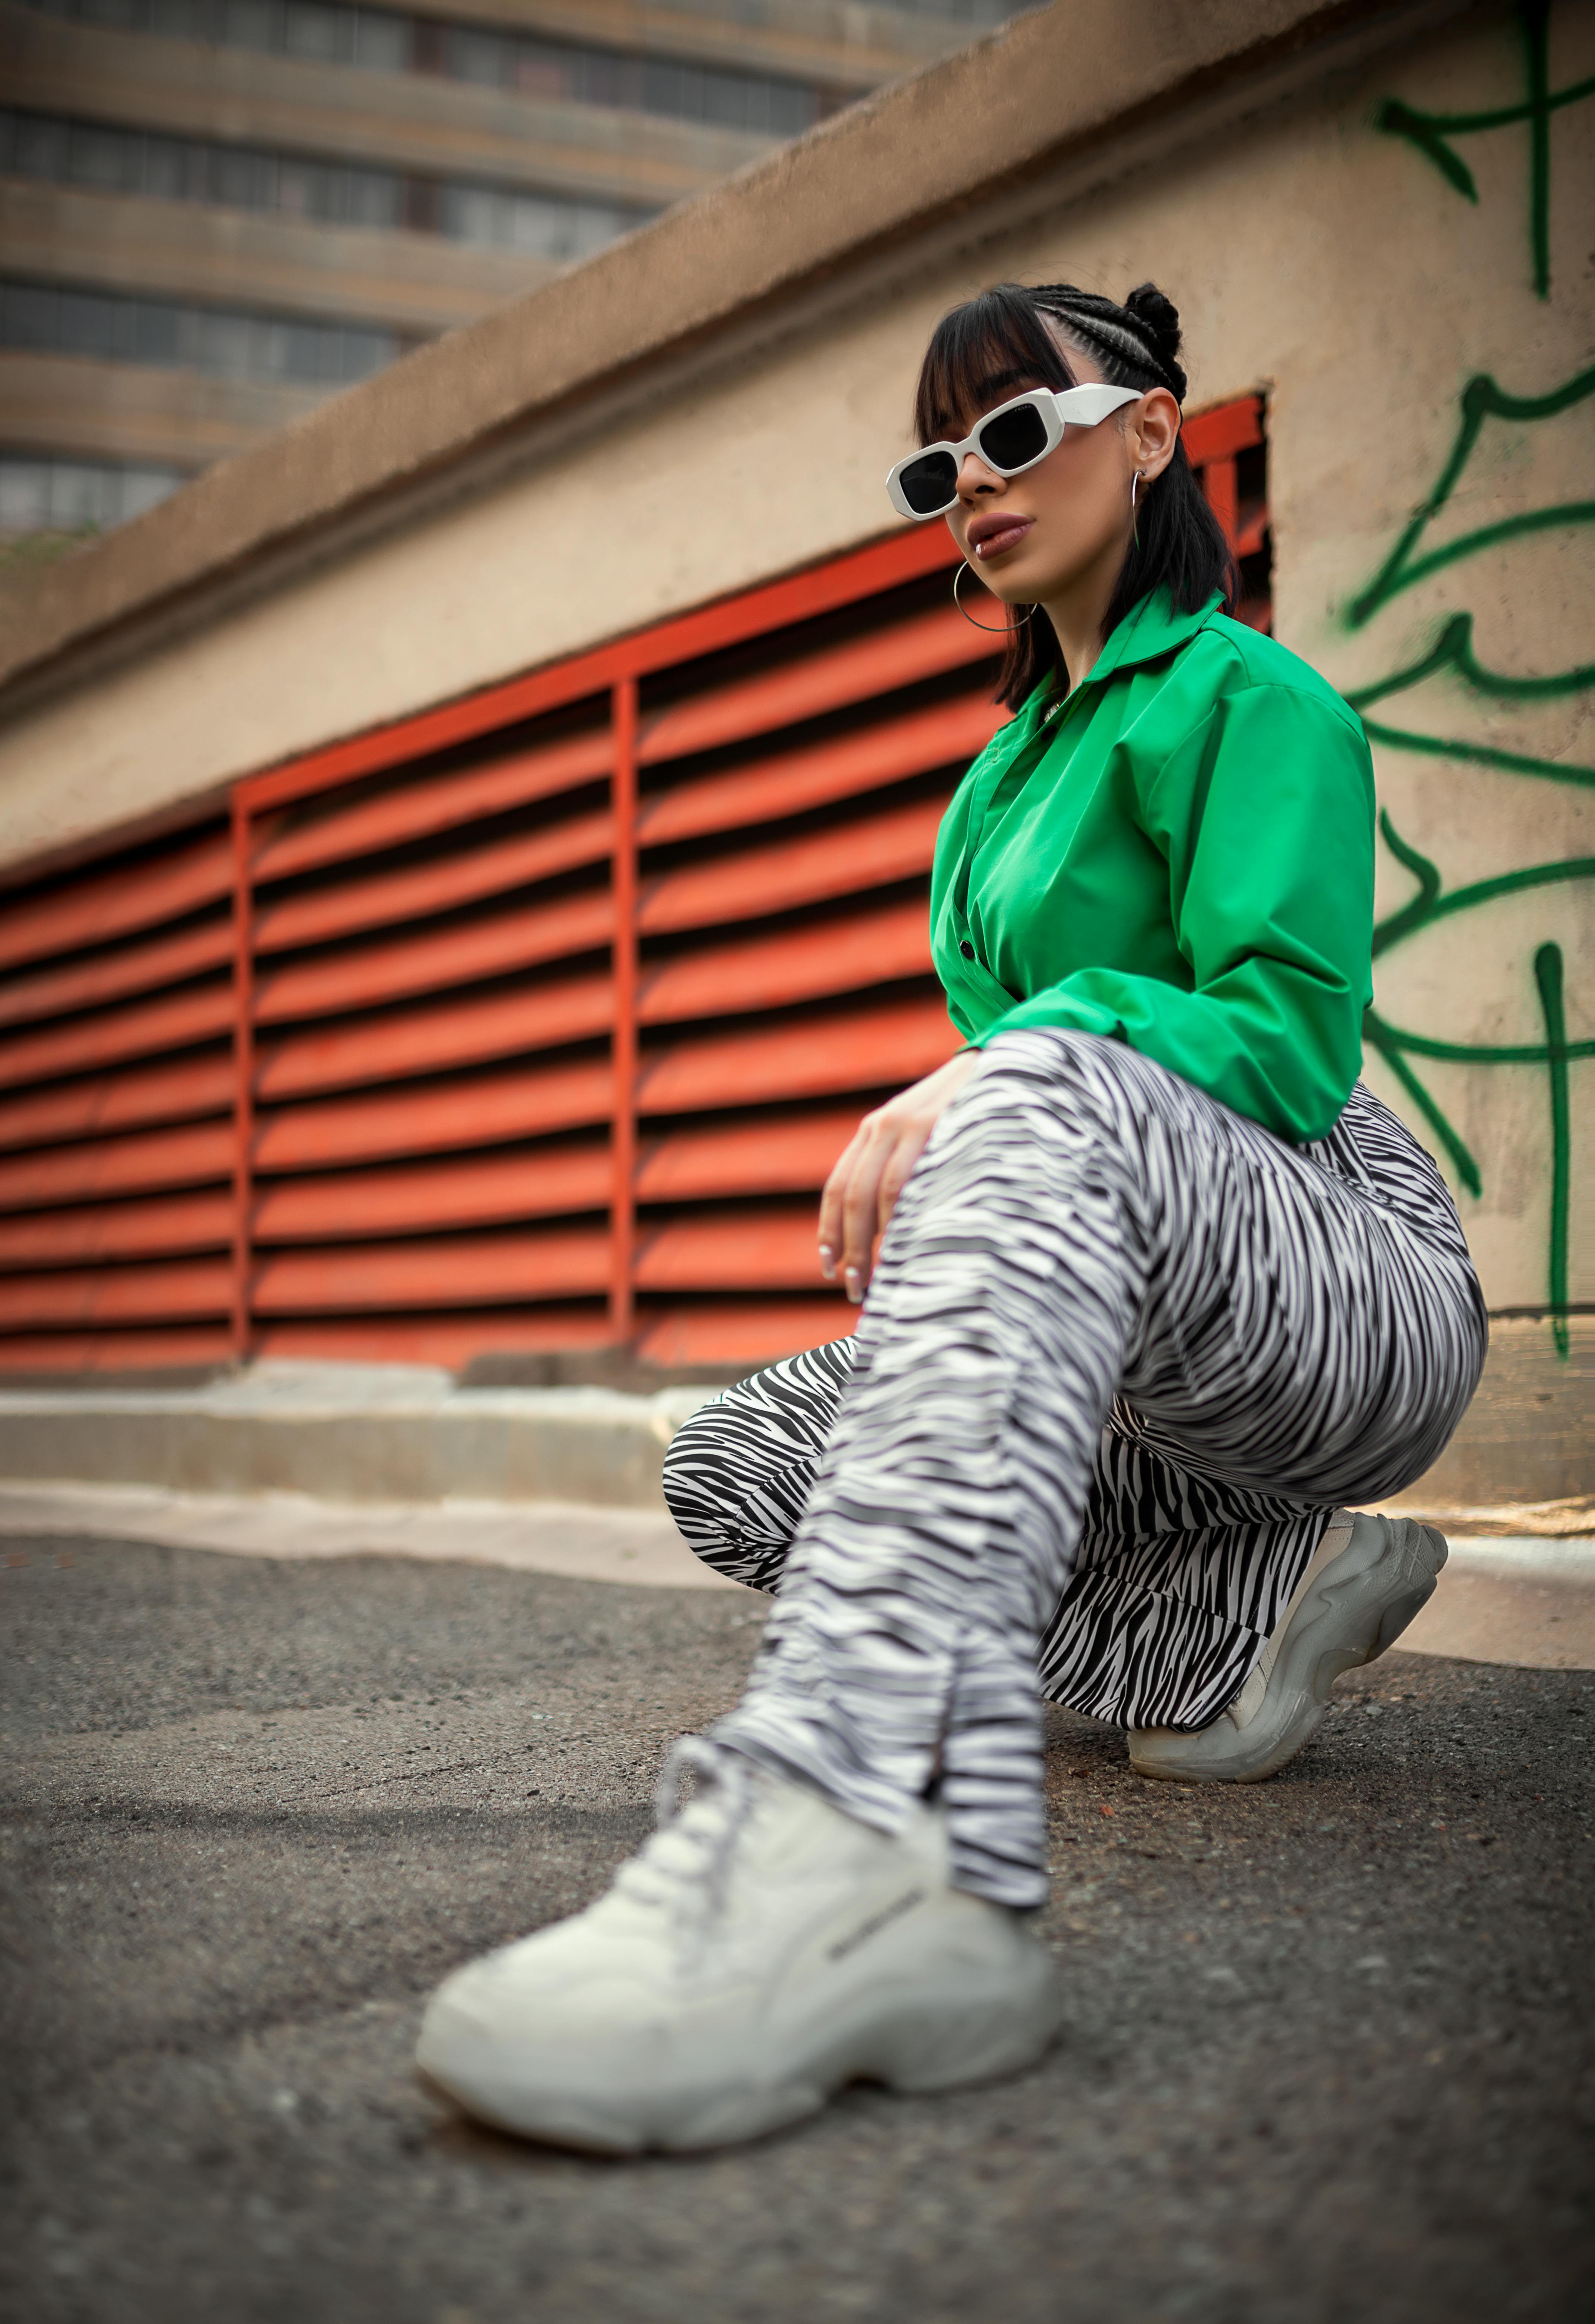 Woman Wearing a Green Top and Zebra Print Pants · Free Stock Photo